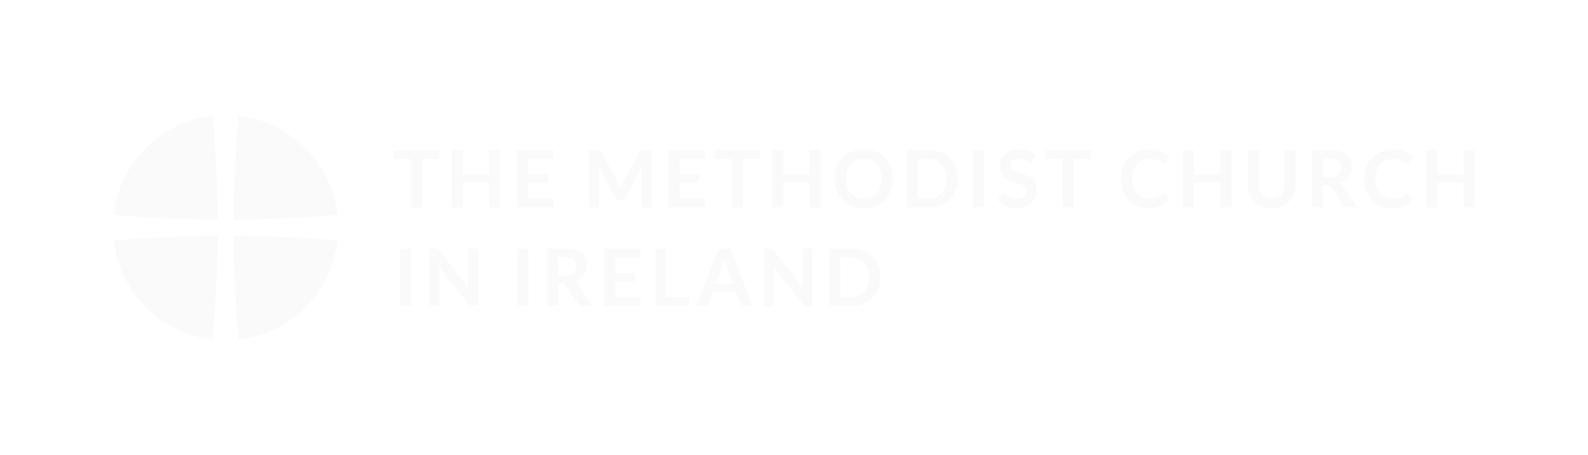 Methodist Church Ireland